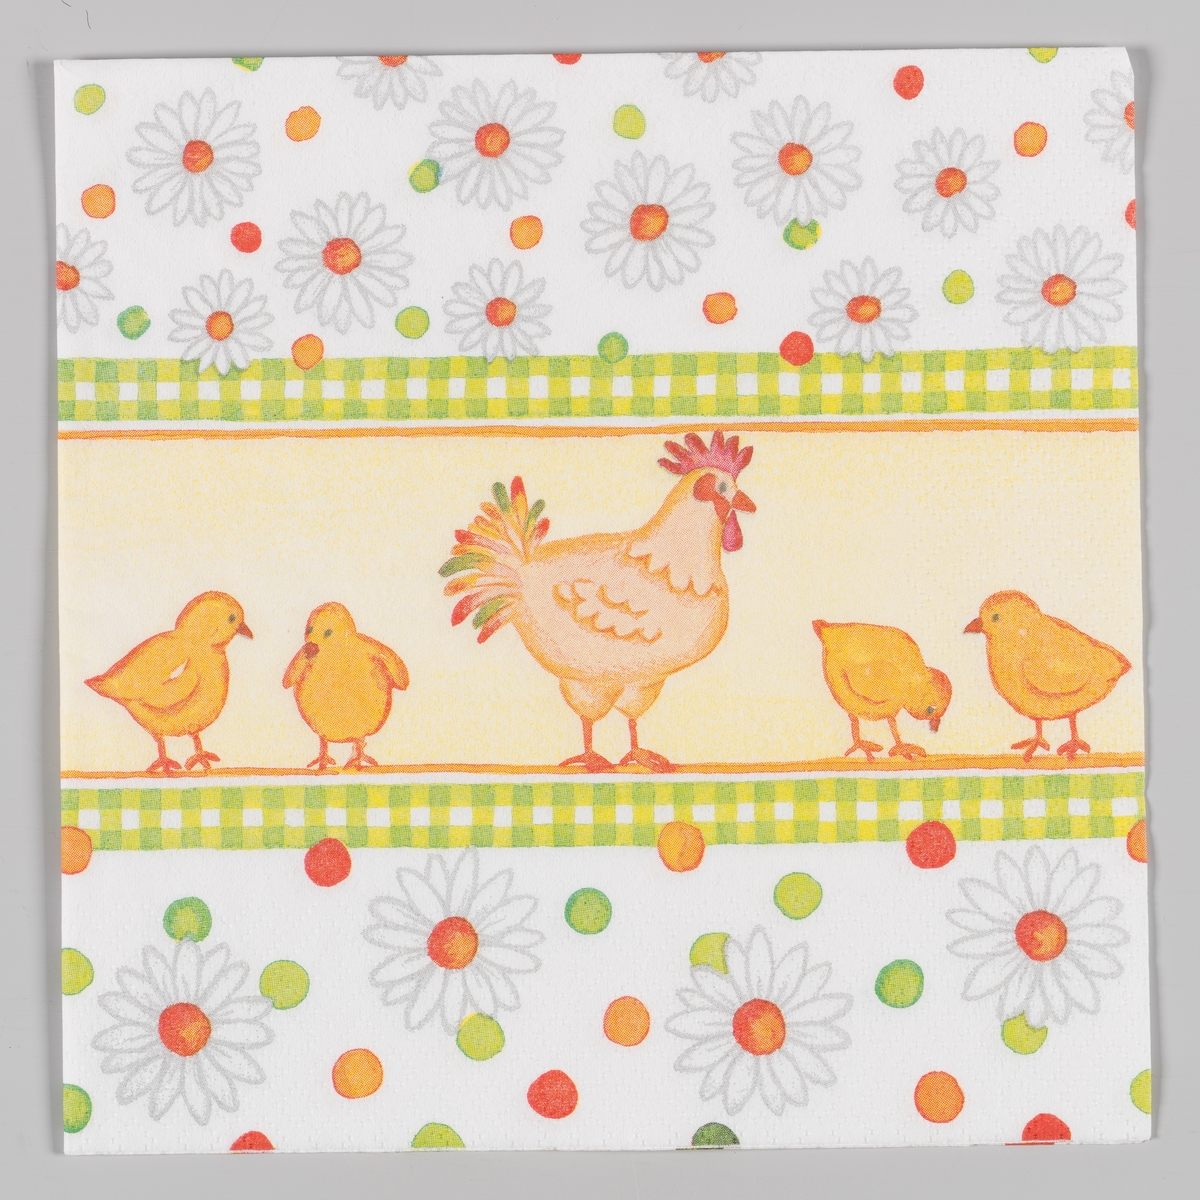 En hønemor sammen med fire kyllinger. To grønne og hvitrutete striper. Hvite blomster og røde, grønne og oransje prikker.